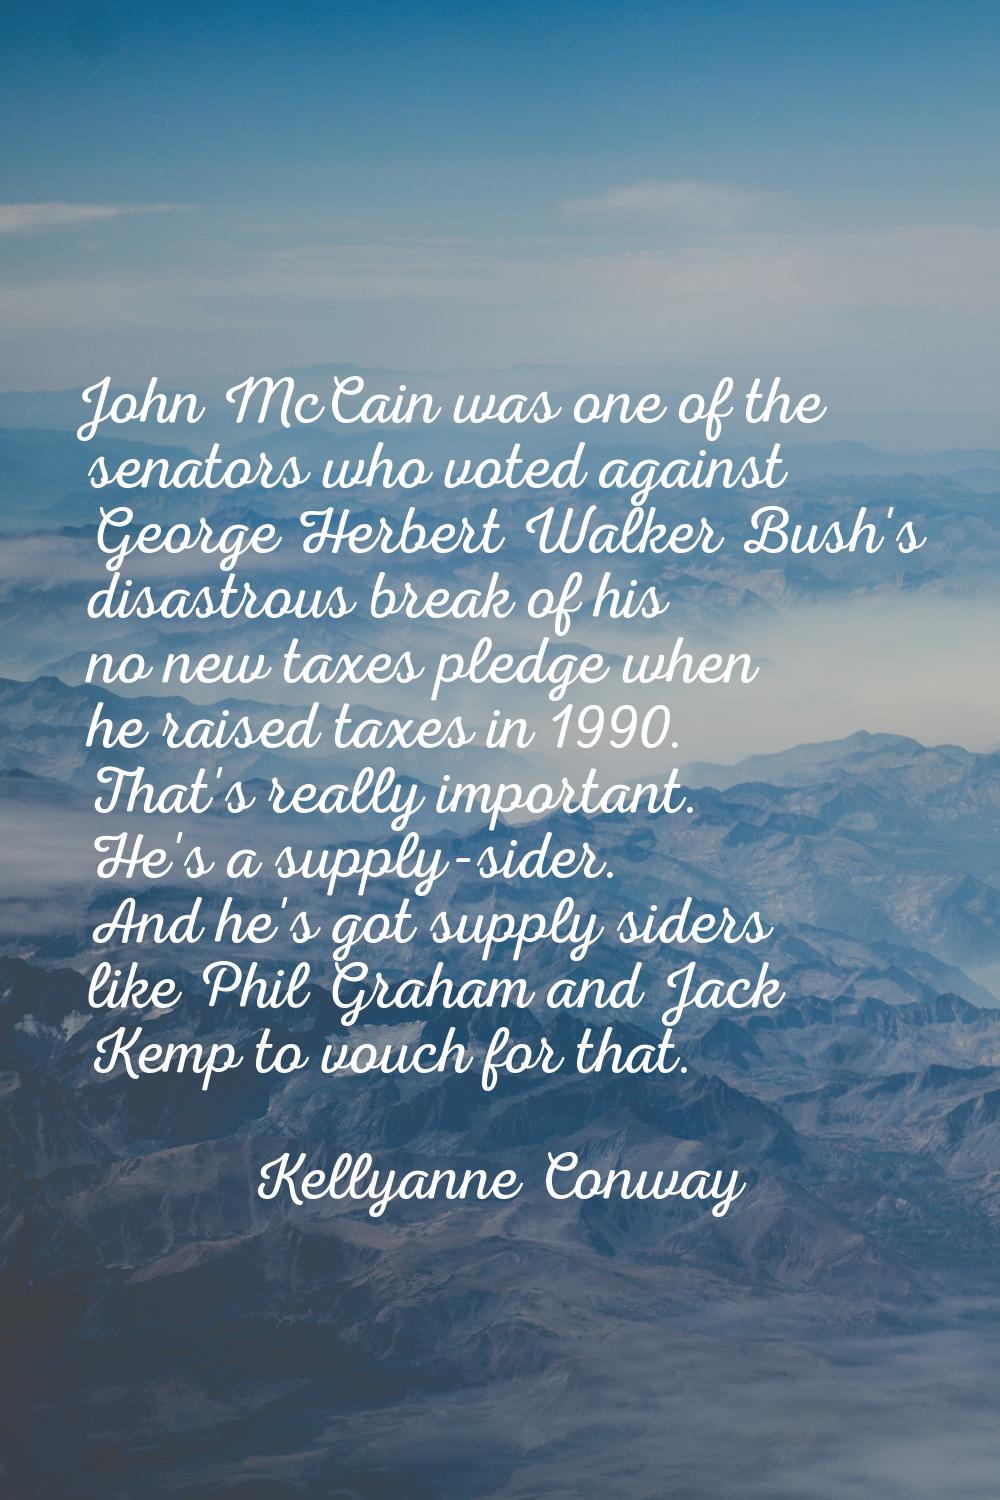 John McCain was one of the senators who voted against George Herbert Walker Bush's disastrous break